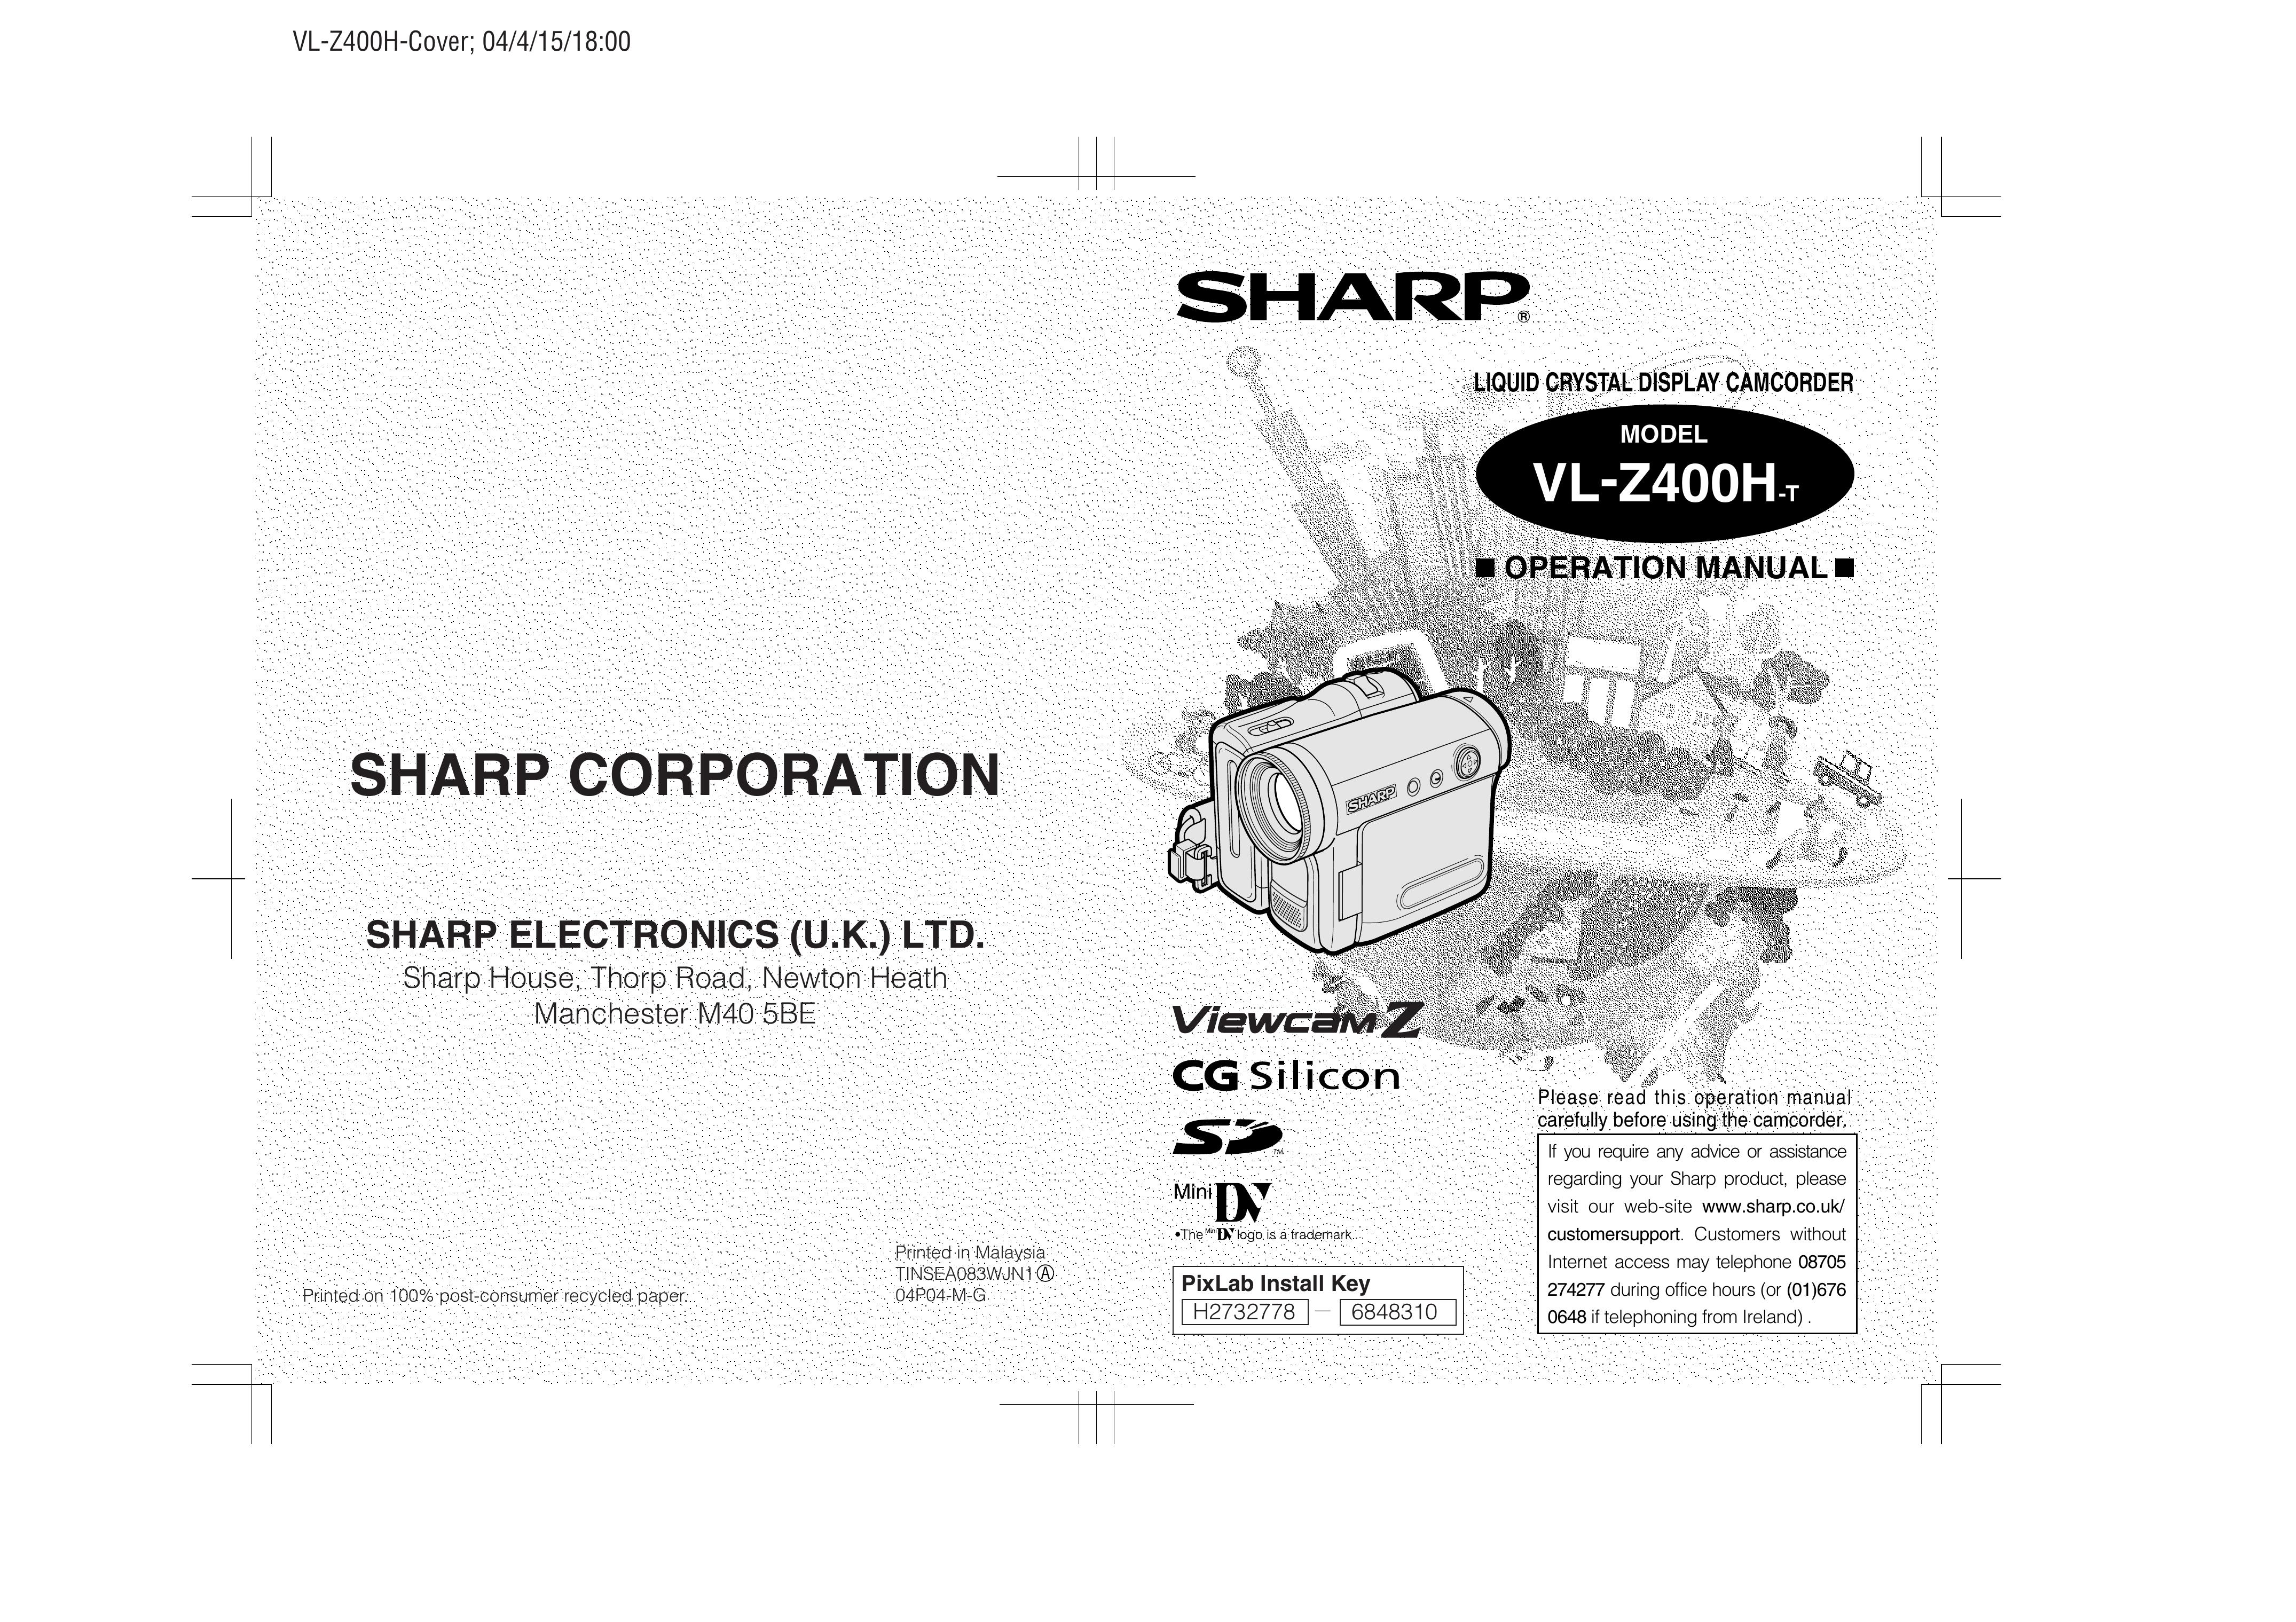 Sharp VL-Z400H-T Camcorder User Manual